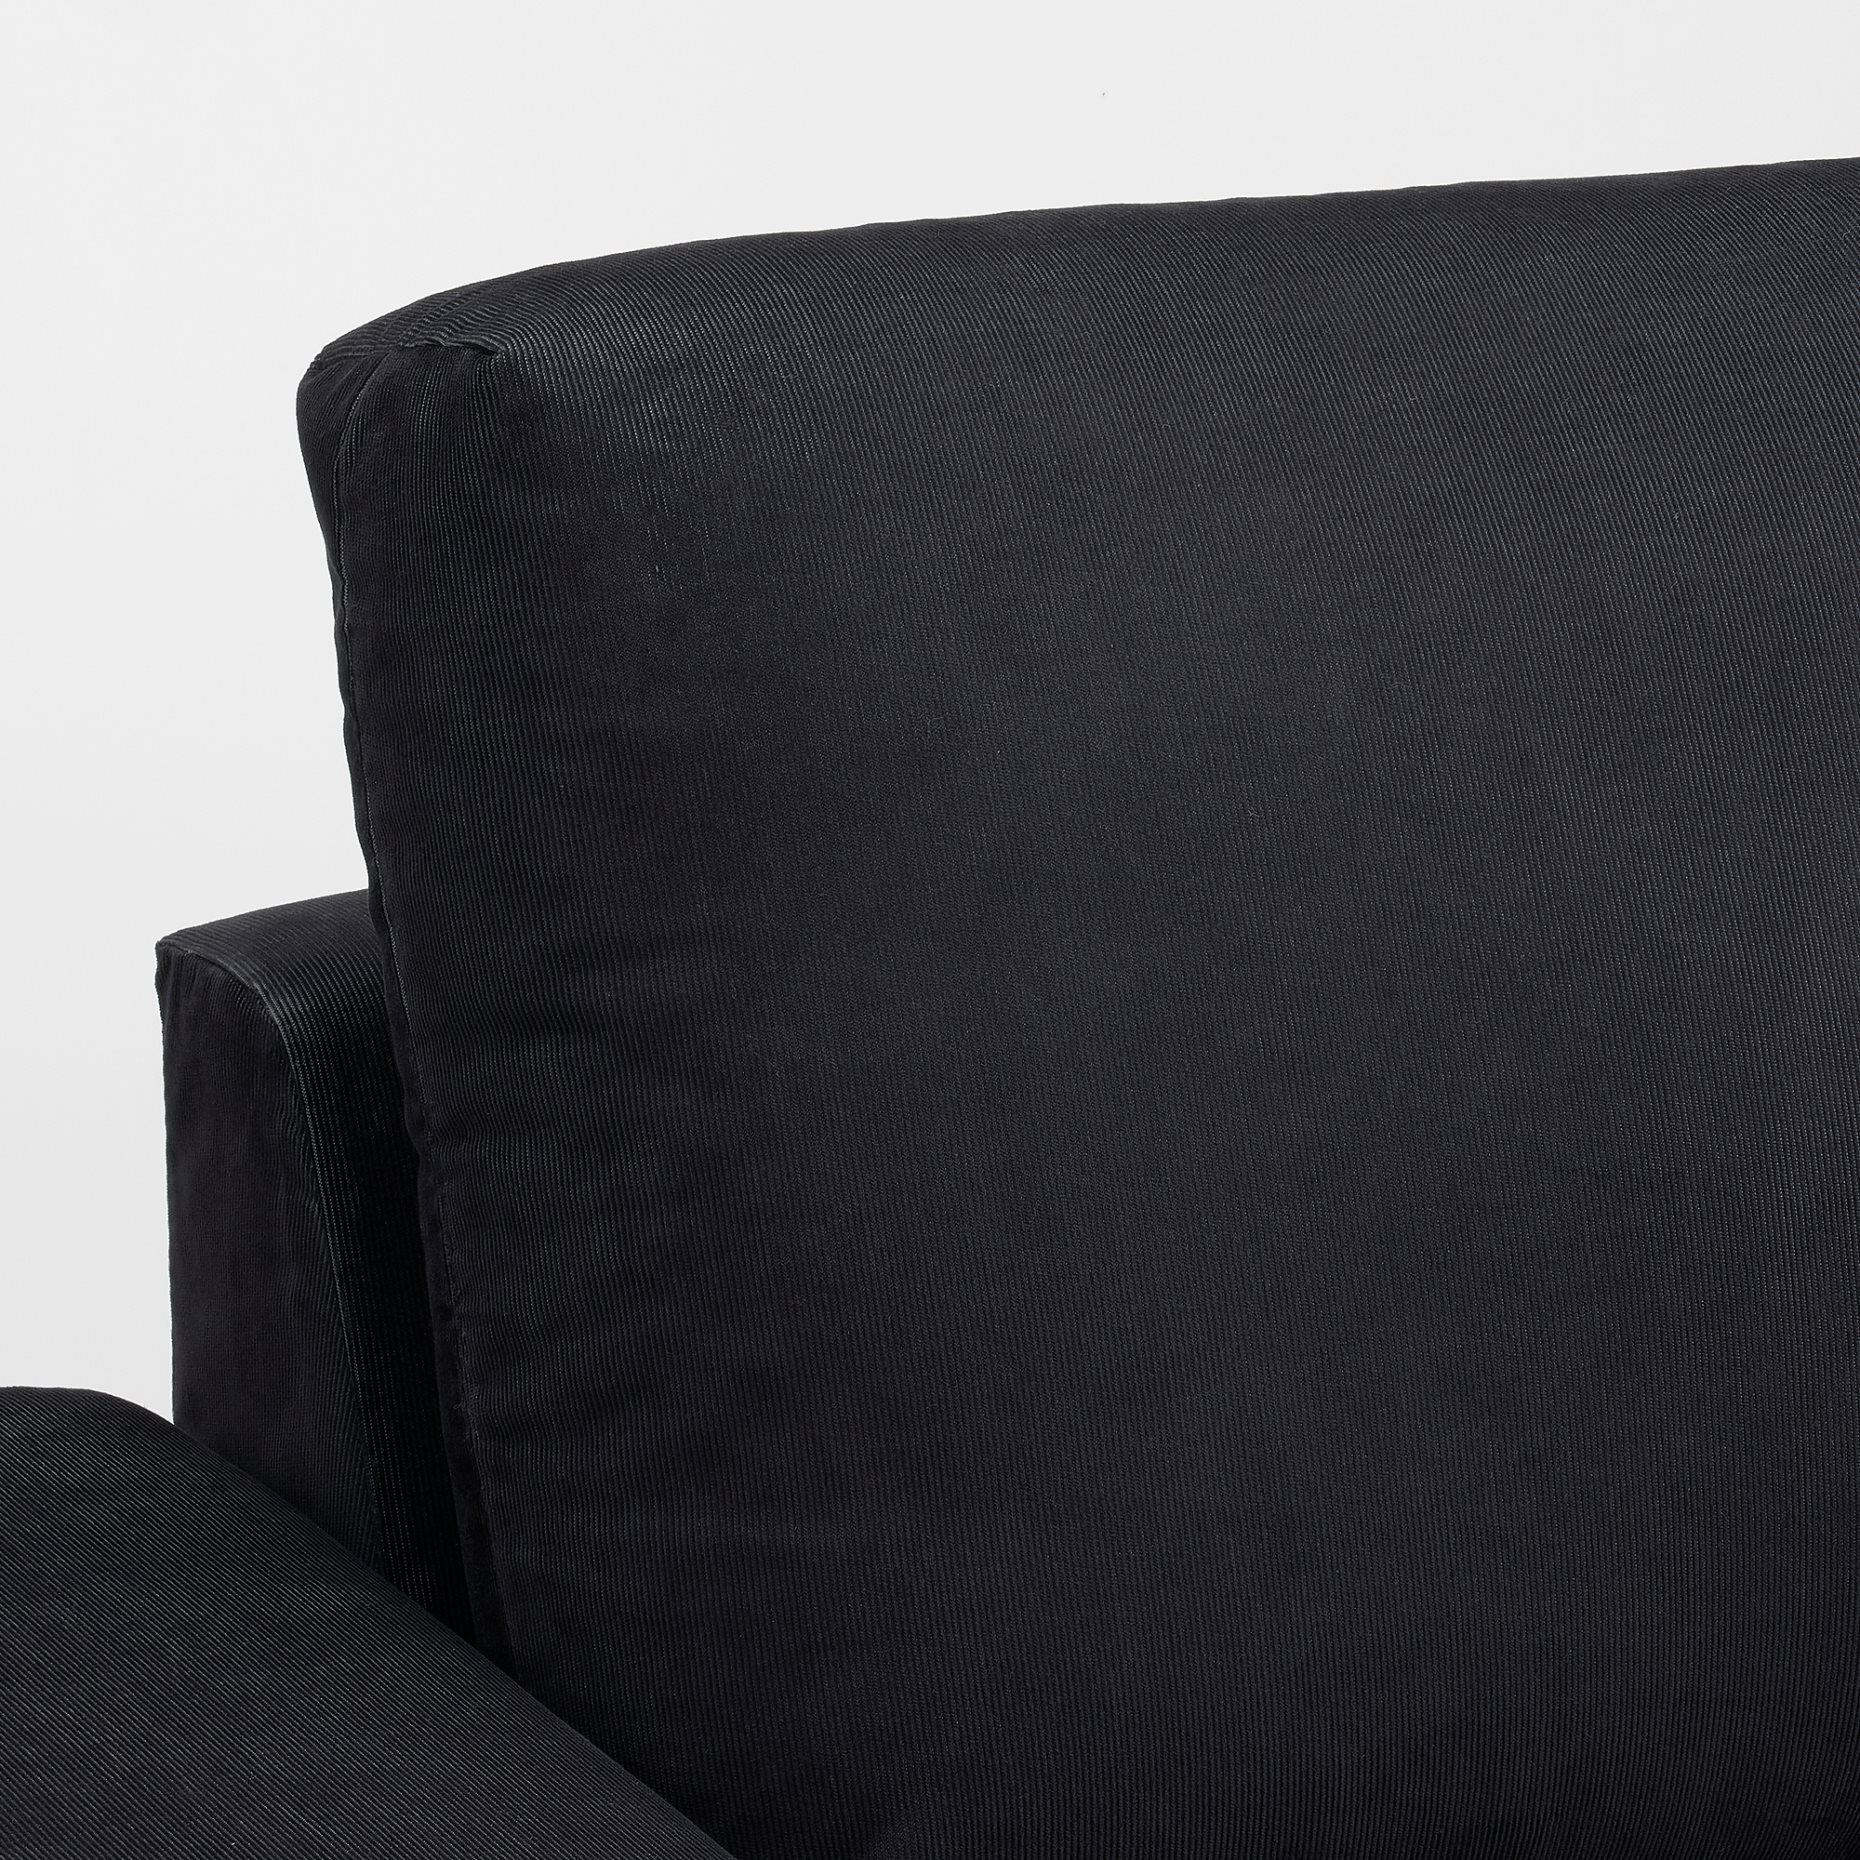 VIMLE, τριθέσιος καναπές-κρεβάτι με πλατιά μπράτσα και σεζλόνγκ, 295.372.27